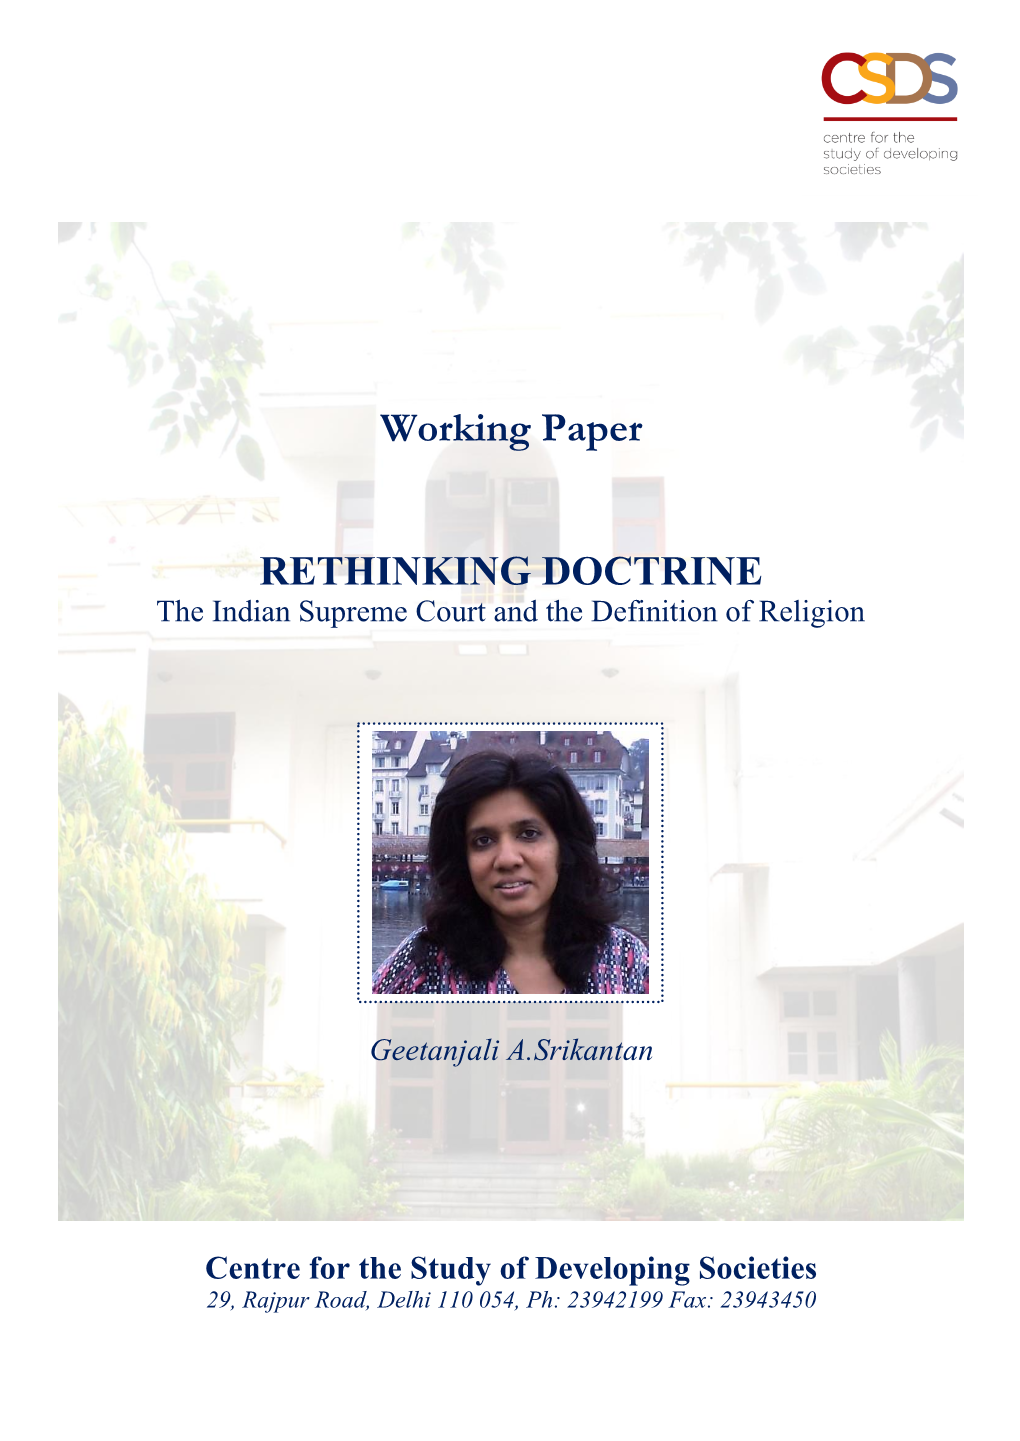 Geetanjali A.Srikantan: Rethinking Doctrine